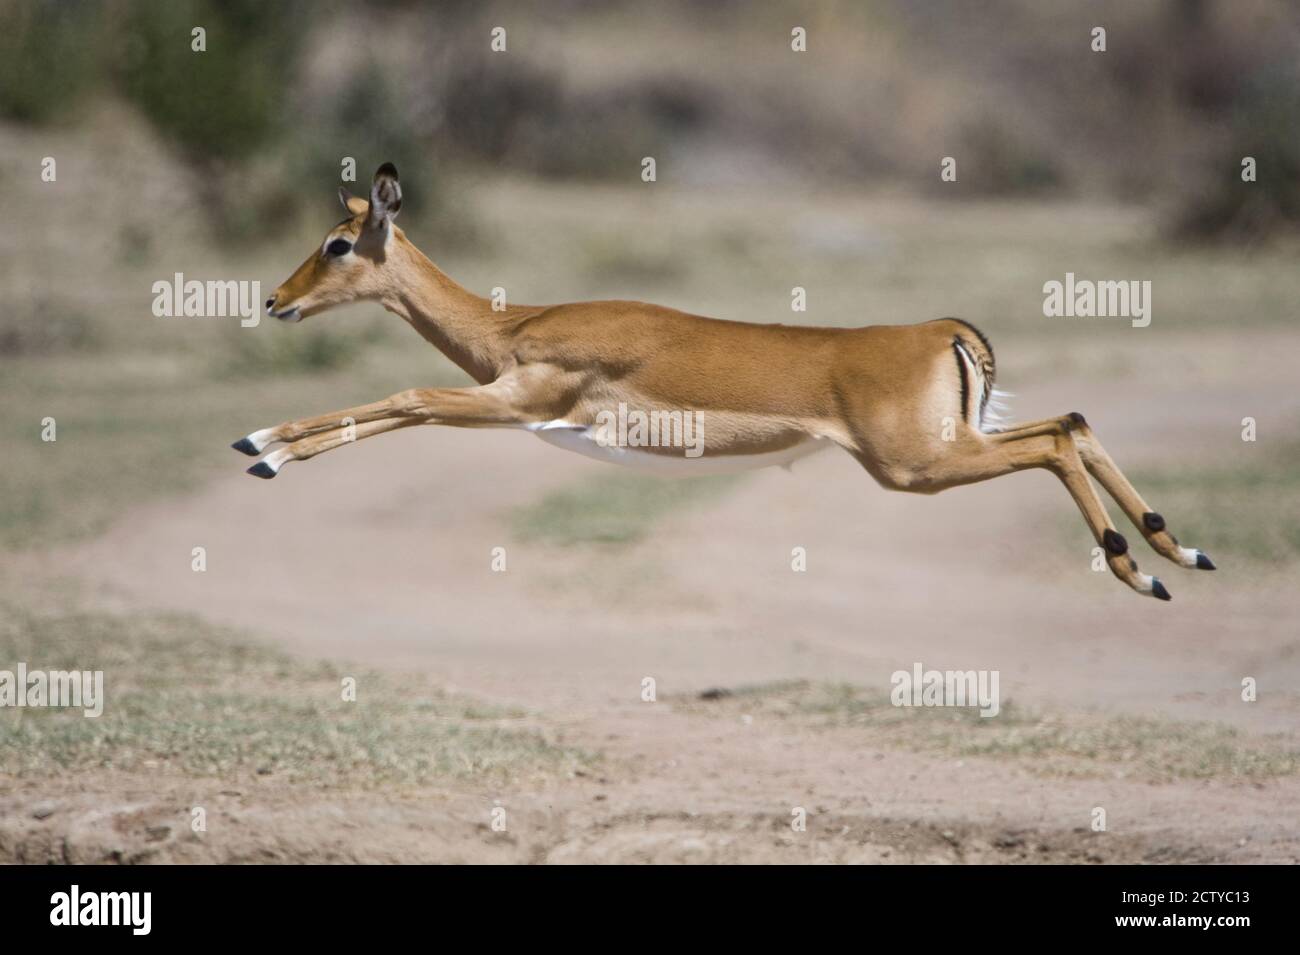 Impala (Aepyceros melampus) qui bonde dans un champ, Tanzanie Banque D'Images